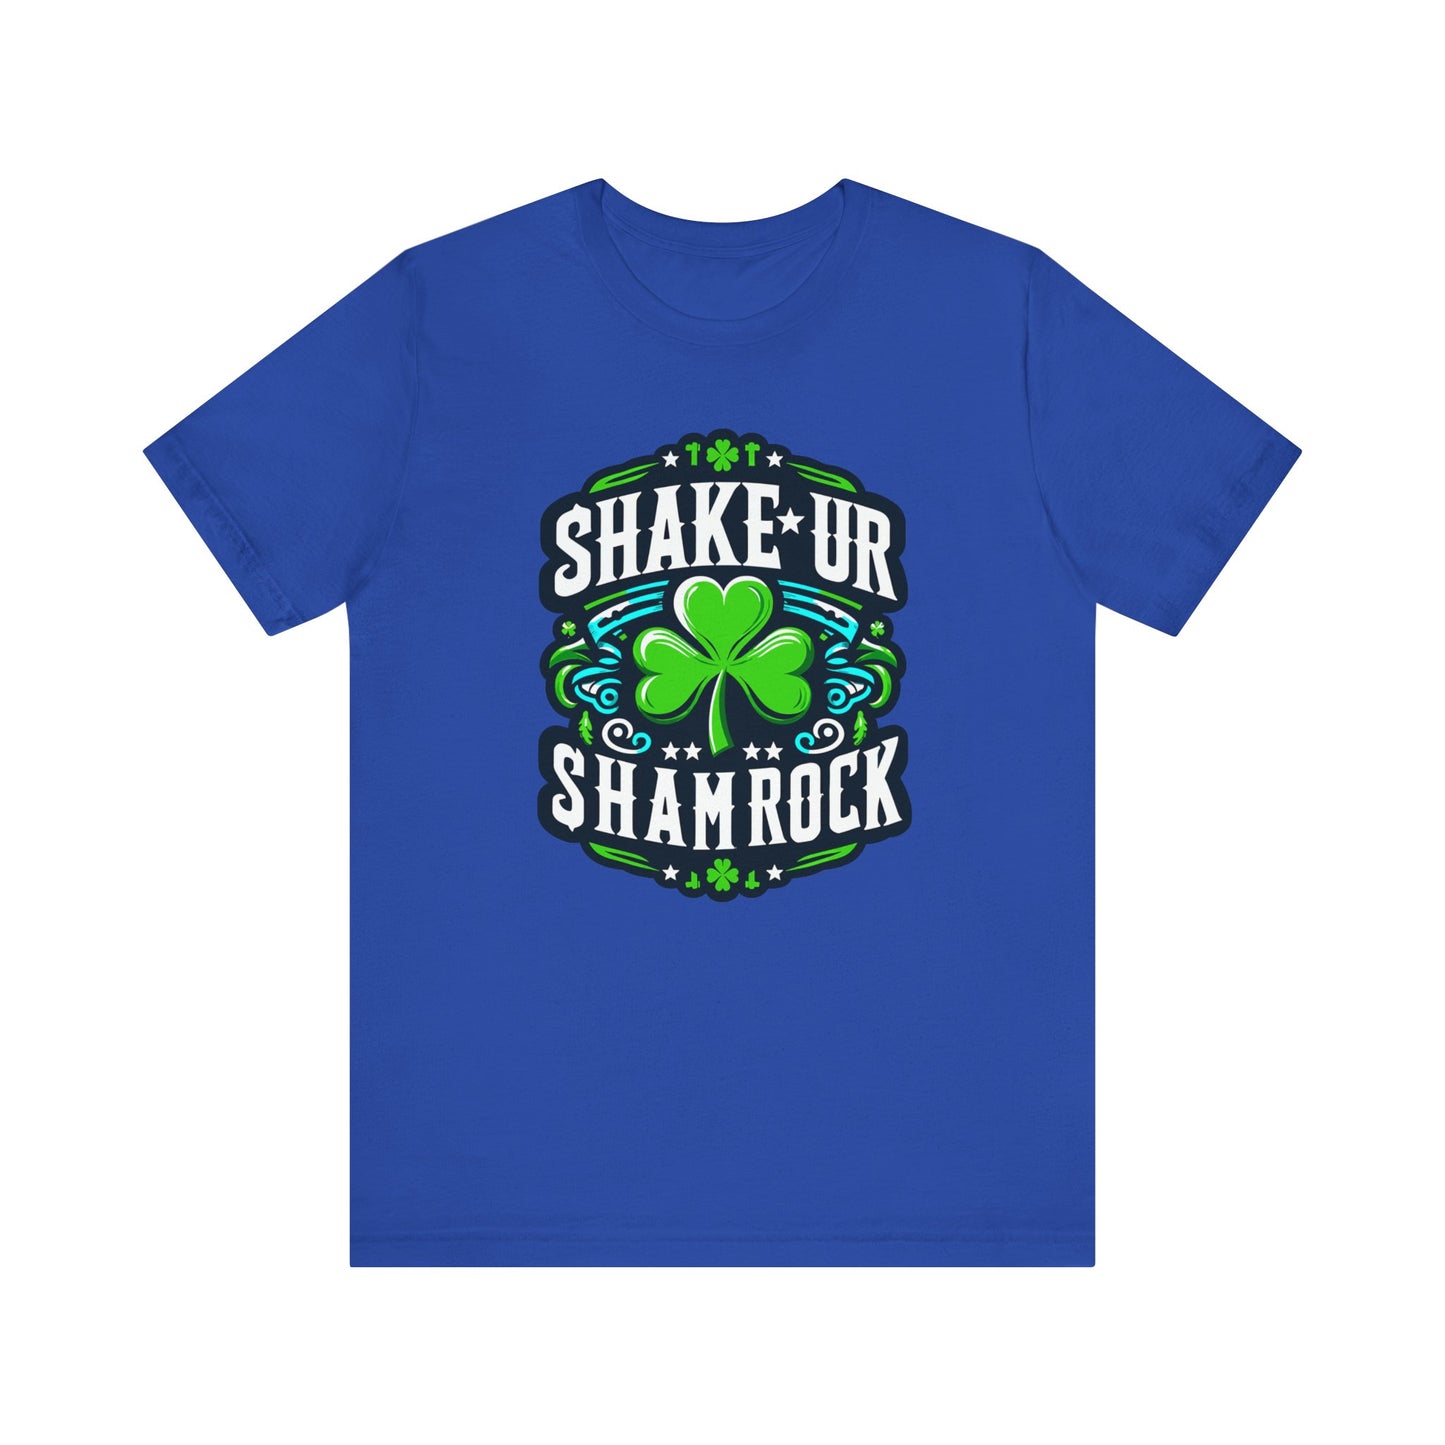 Shake Ur Shamrock - Unisex T-Shirt